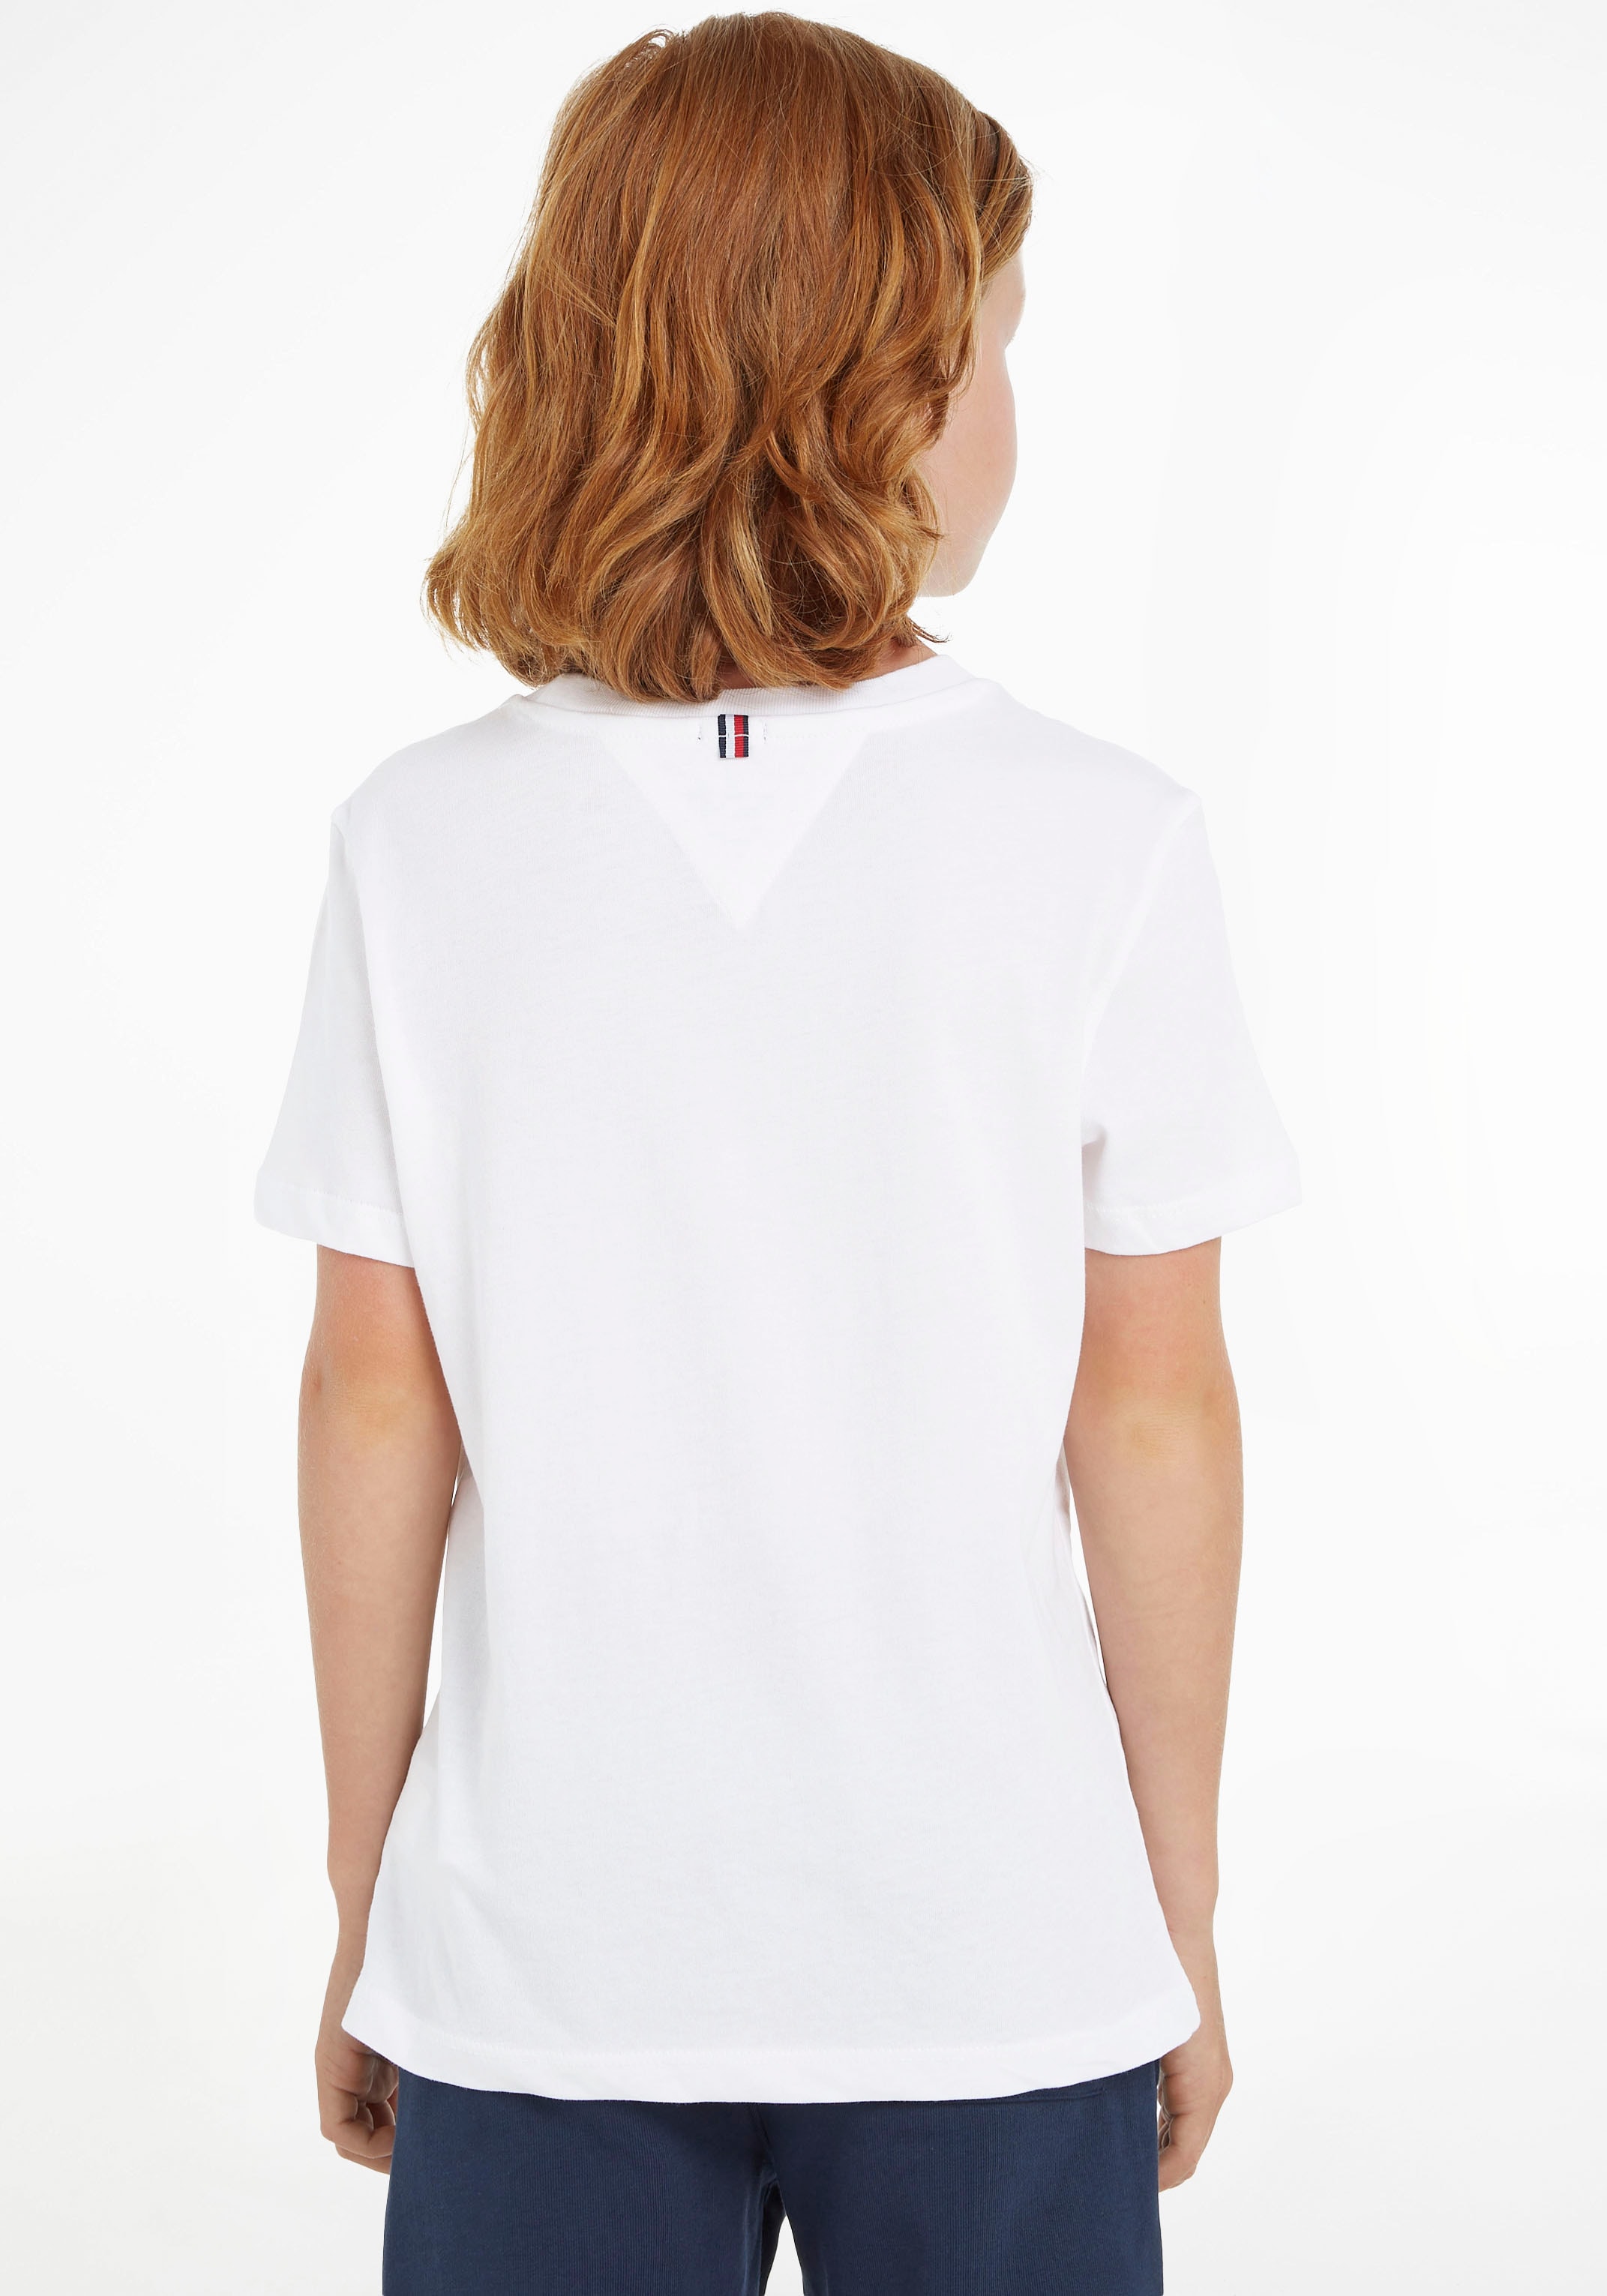 Tommy Hilfiger T-Shirt »BOYS BASIC CN KNIT«, Kinder Kids Junior MiniMe  kaufen bei OTTO